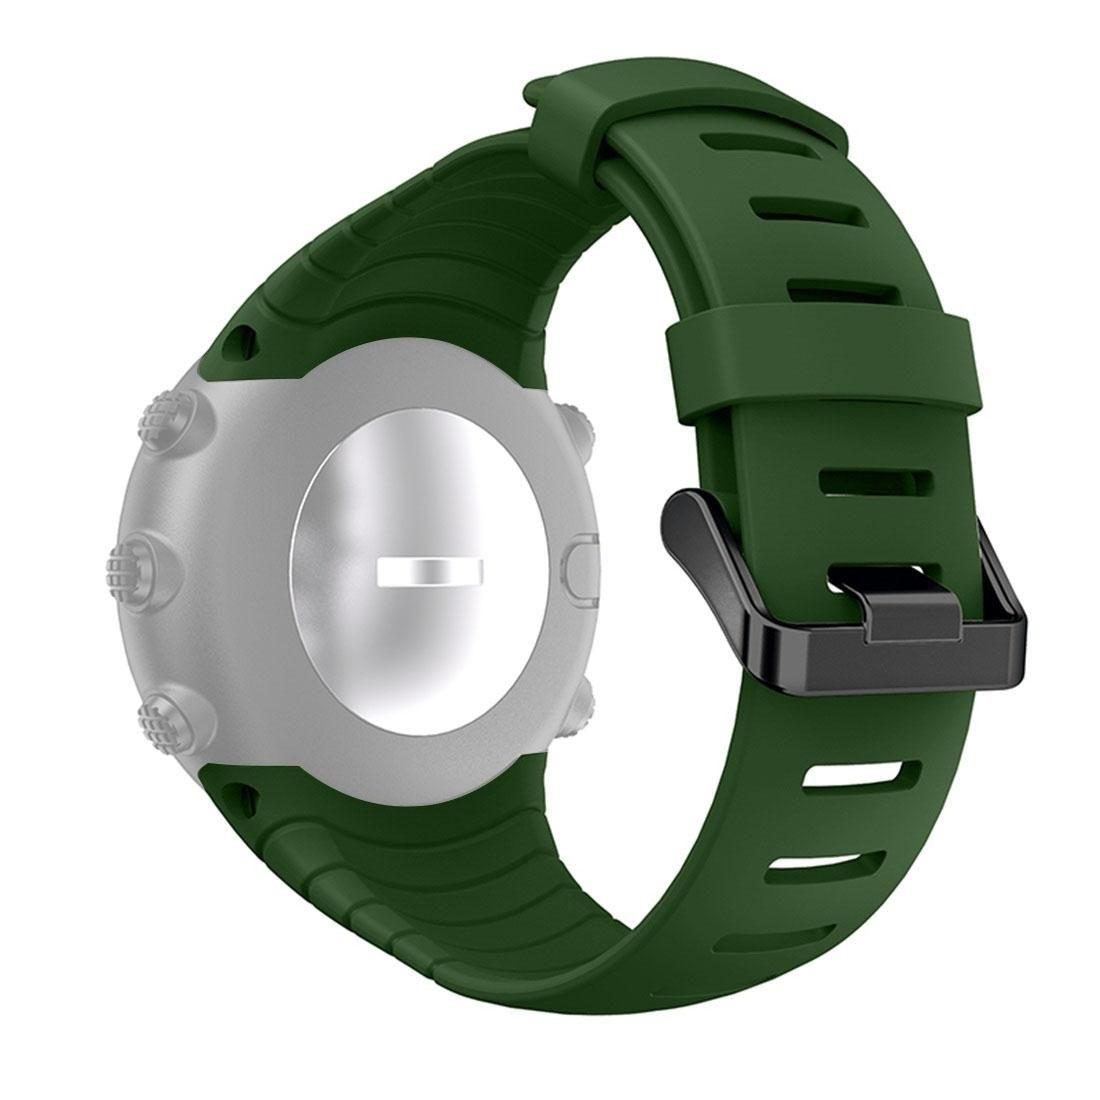 Smart Watch Silicone Wrist Strap Watchband for Suunto Core (White)